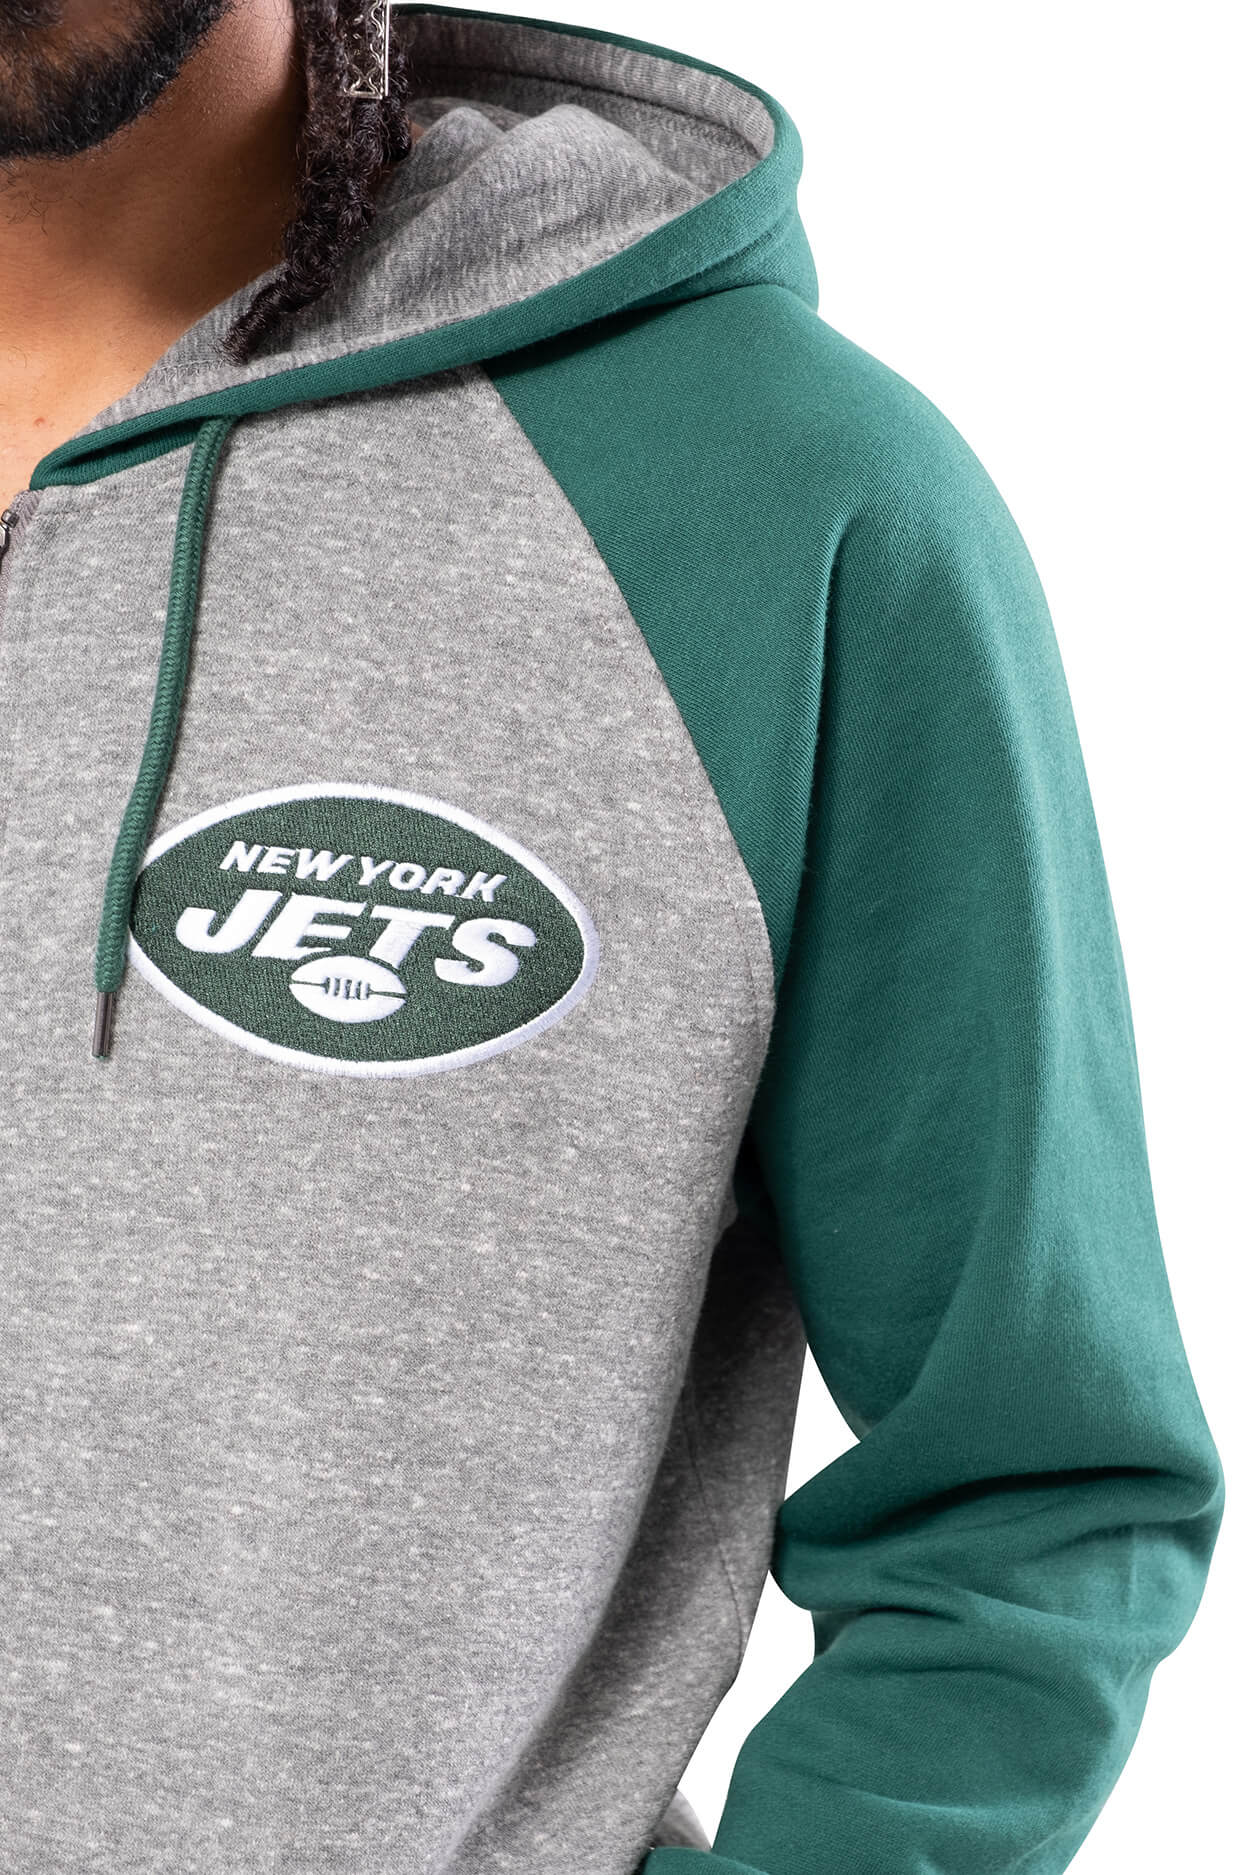 NFL New York Jets Men's Full Zip Hoodie|New York Jets